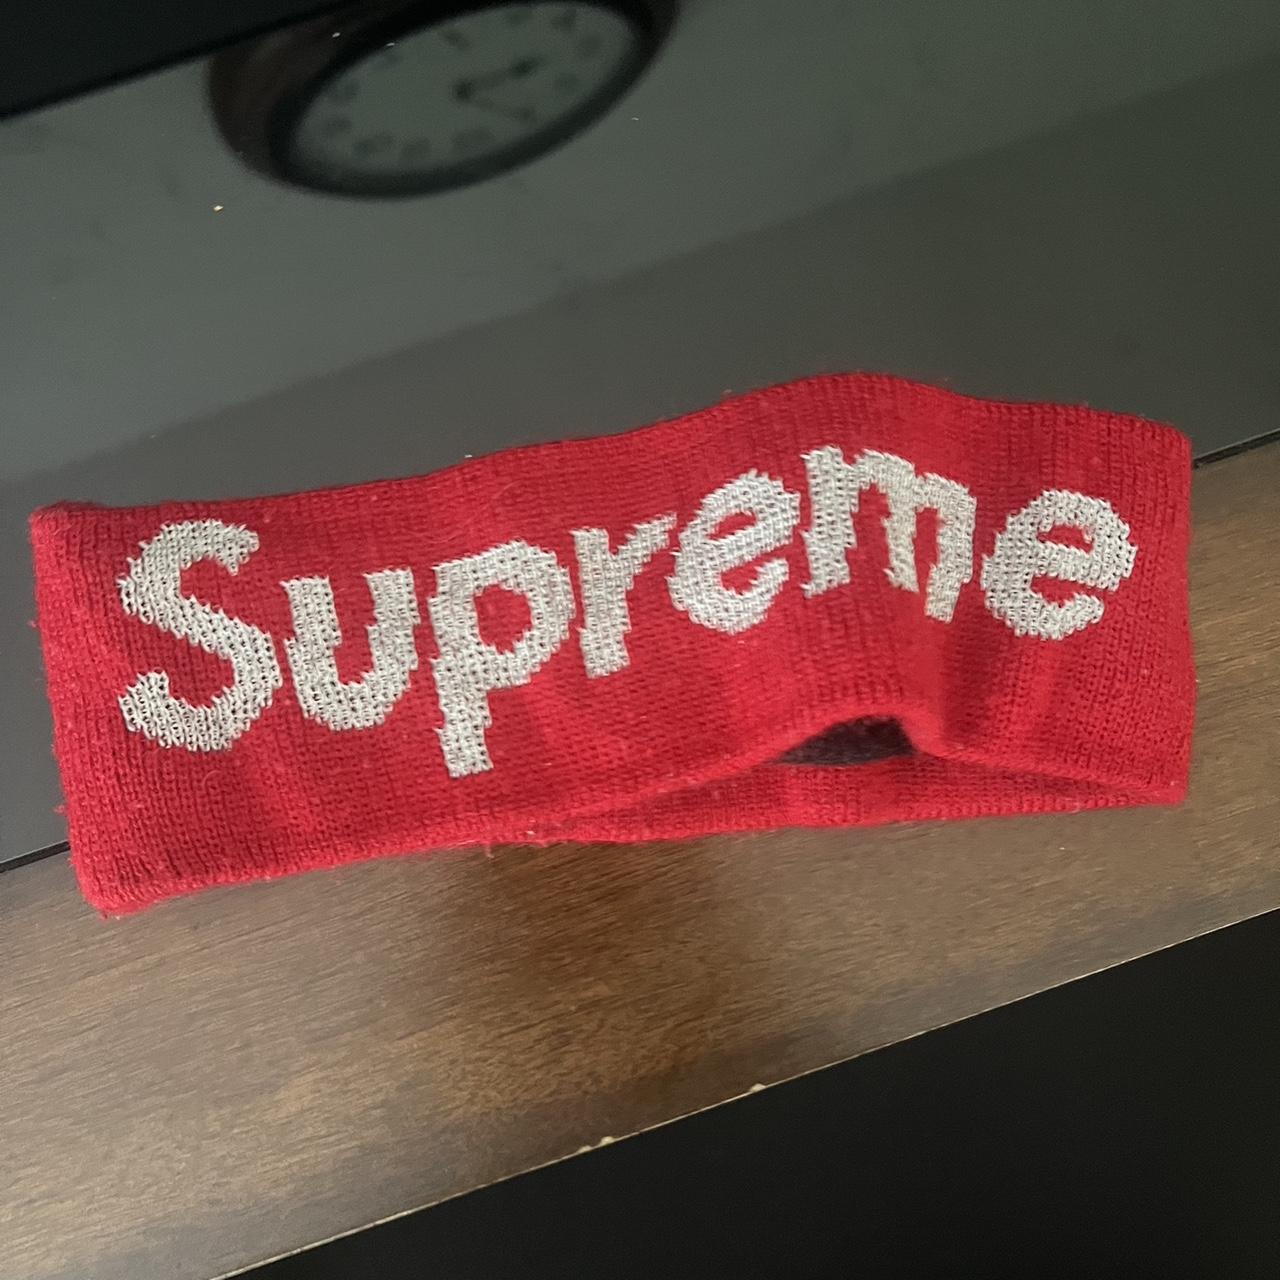 Supreme Headband Red